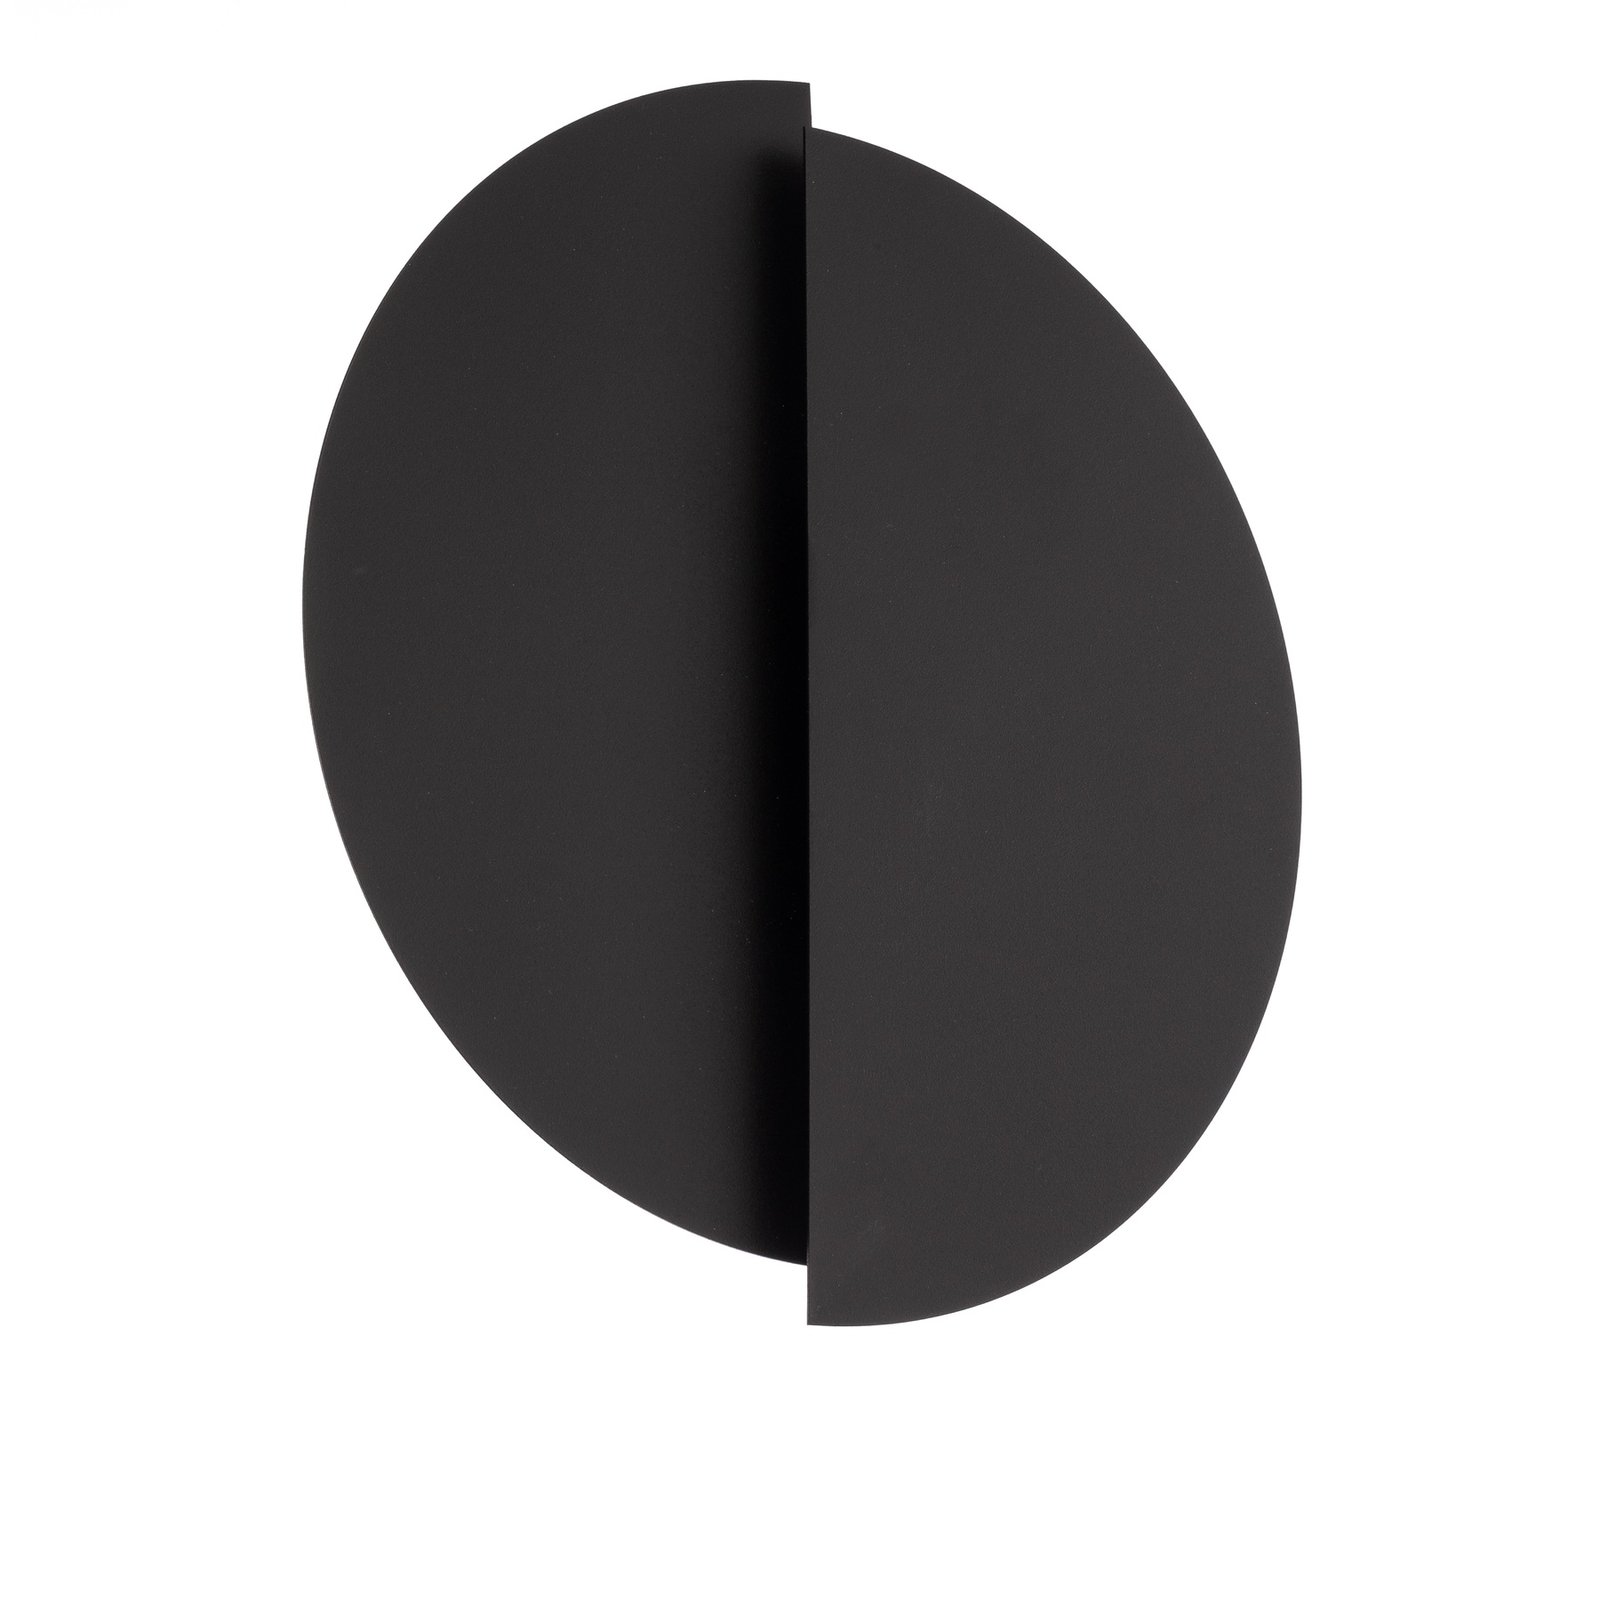 Form 9 wall light, 28 cm x 32 cm, black